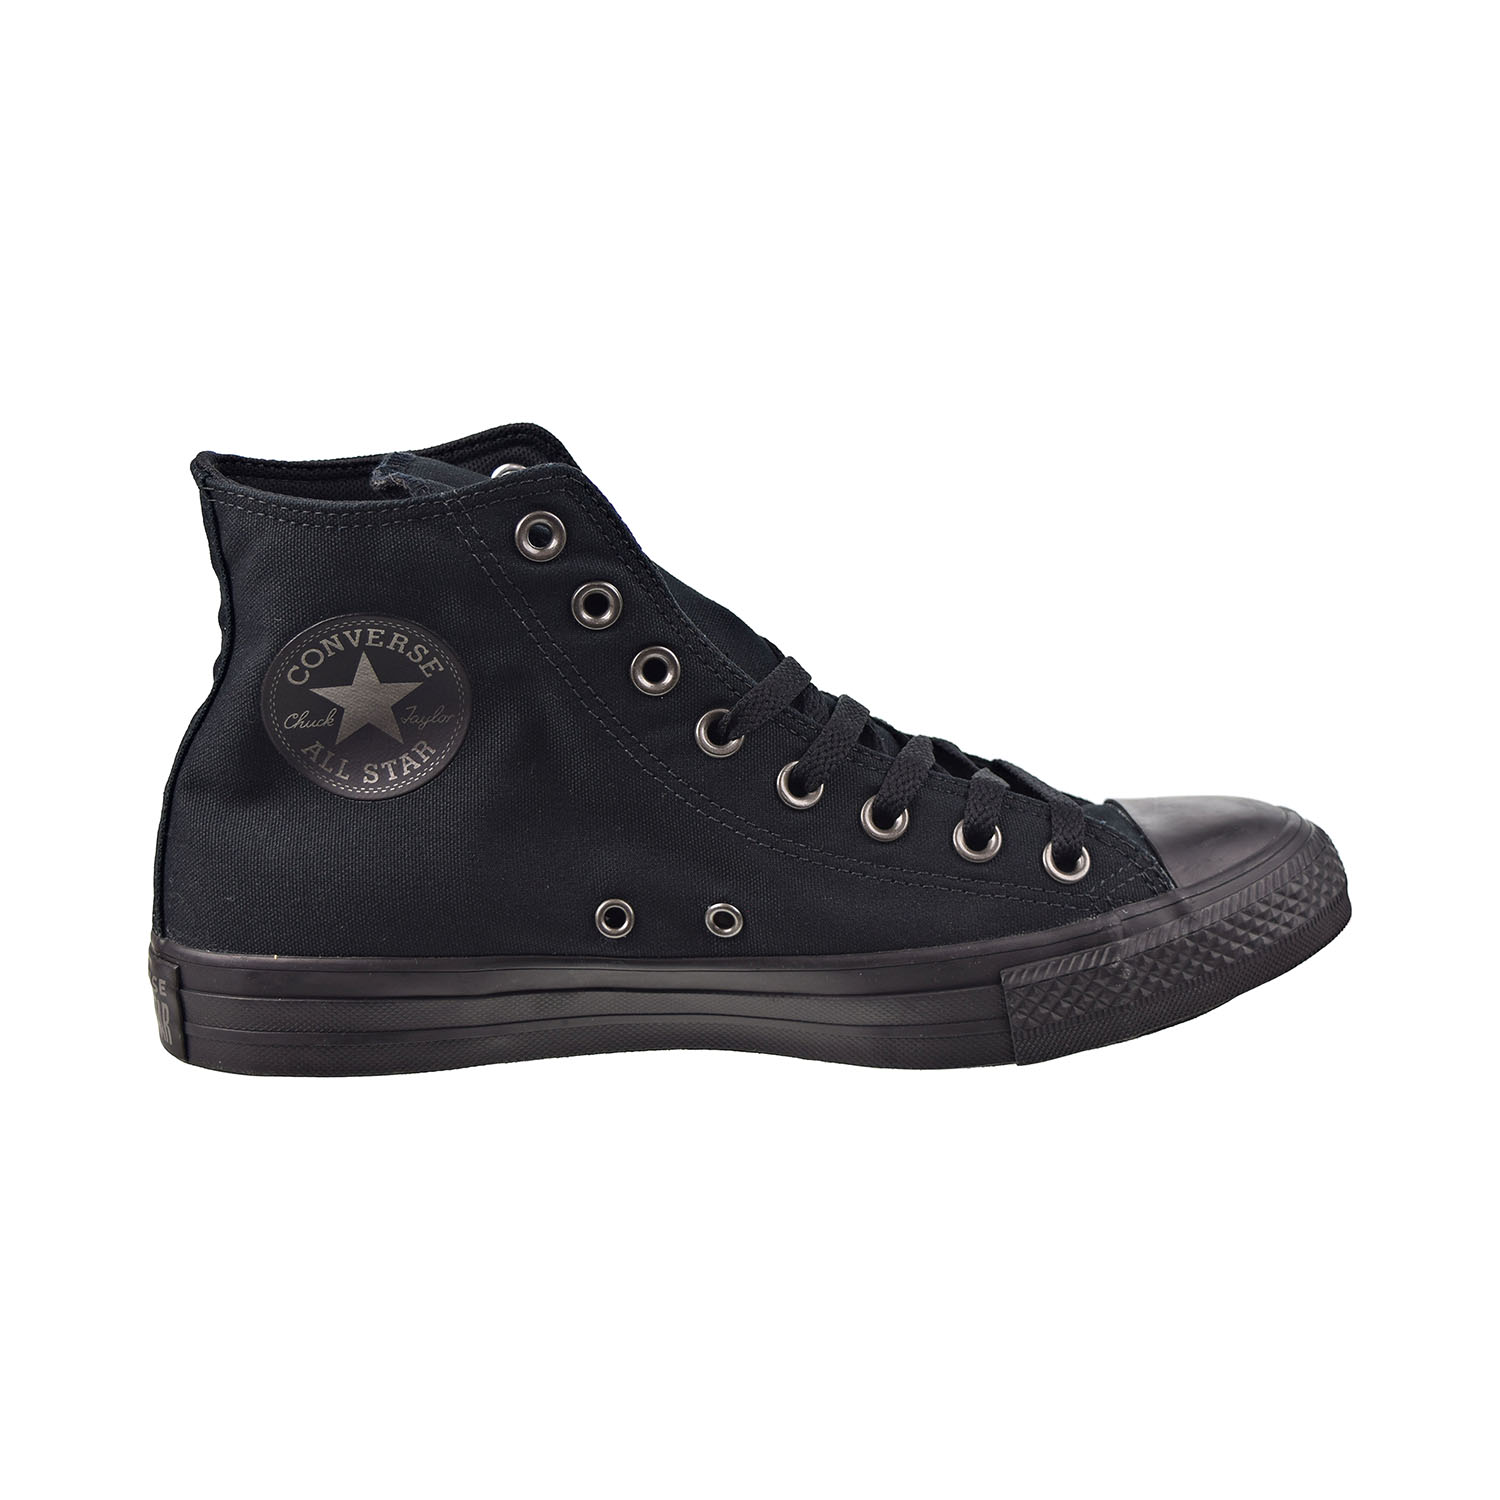 Converse Chuck Taylor All Star Hi Wordmark 2.0 Men's Shoes Black-Gunmetal-Black 165429f - image 1 of 6